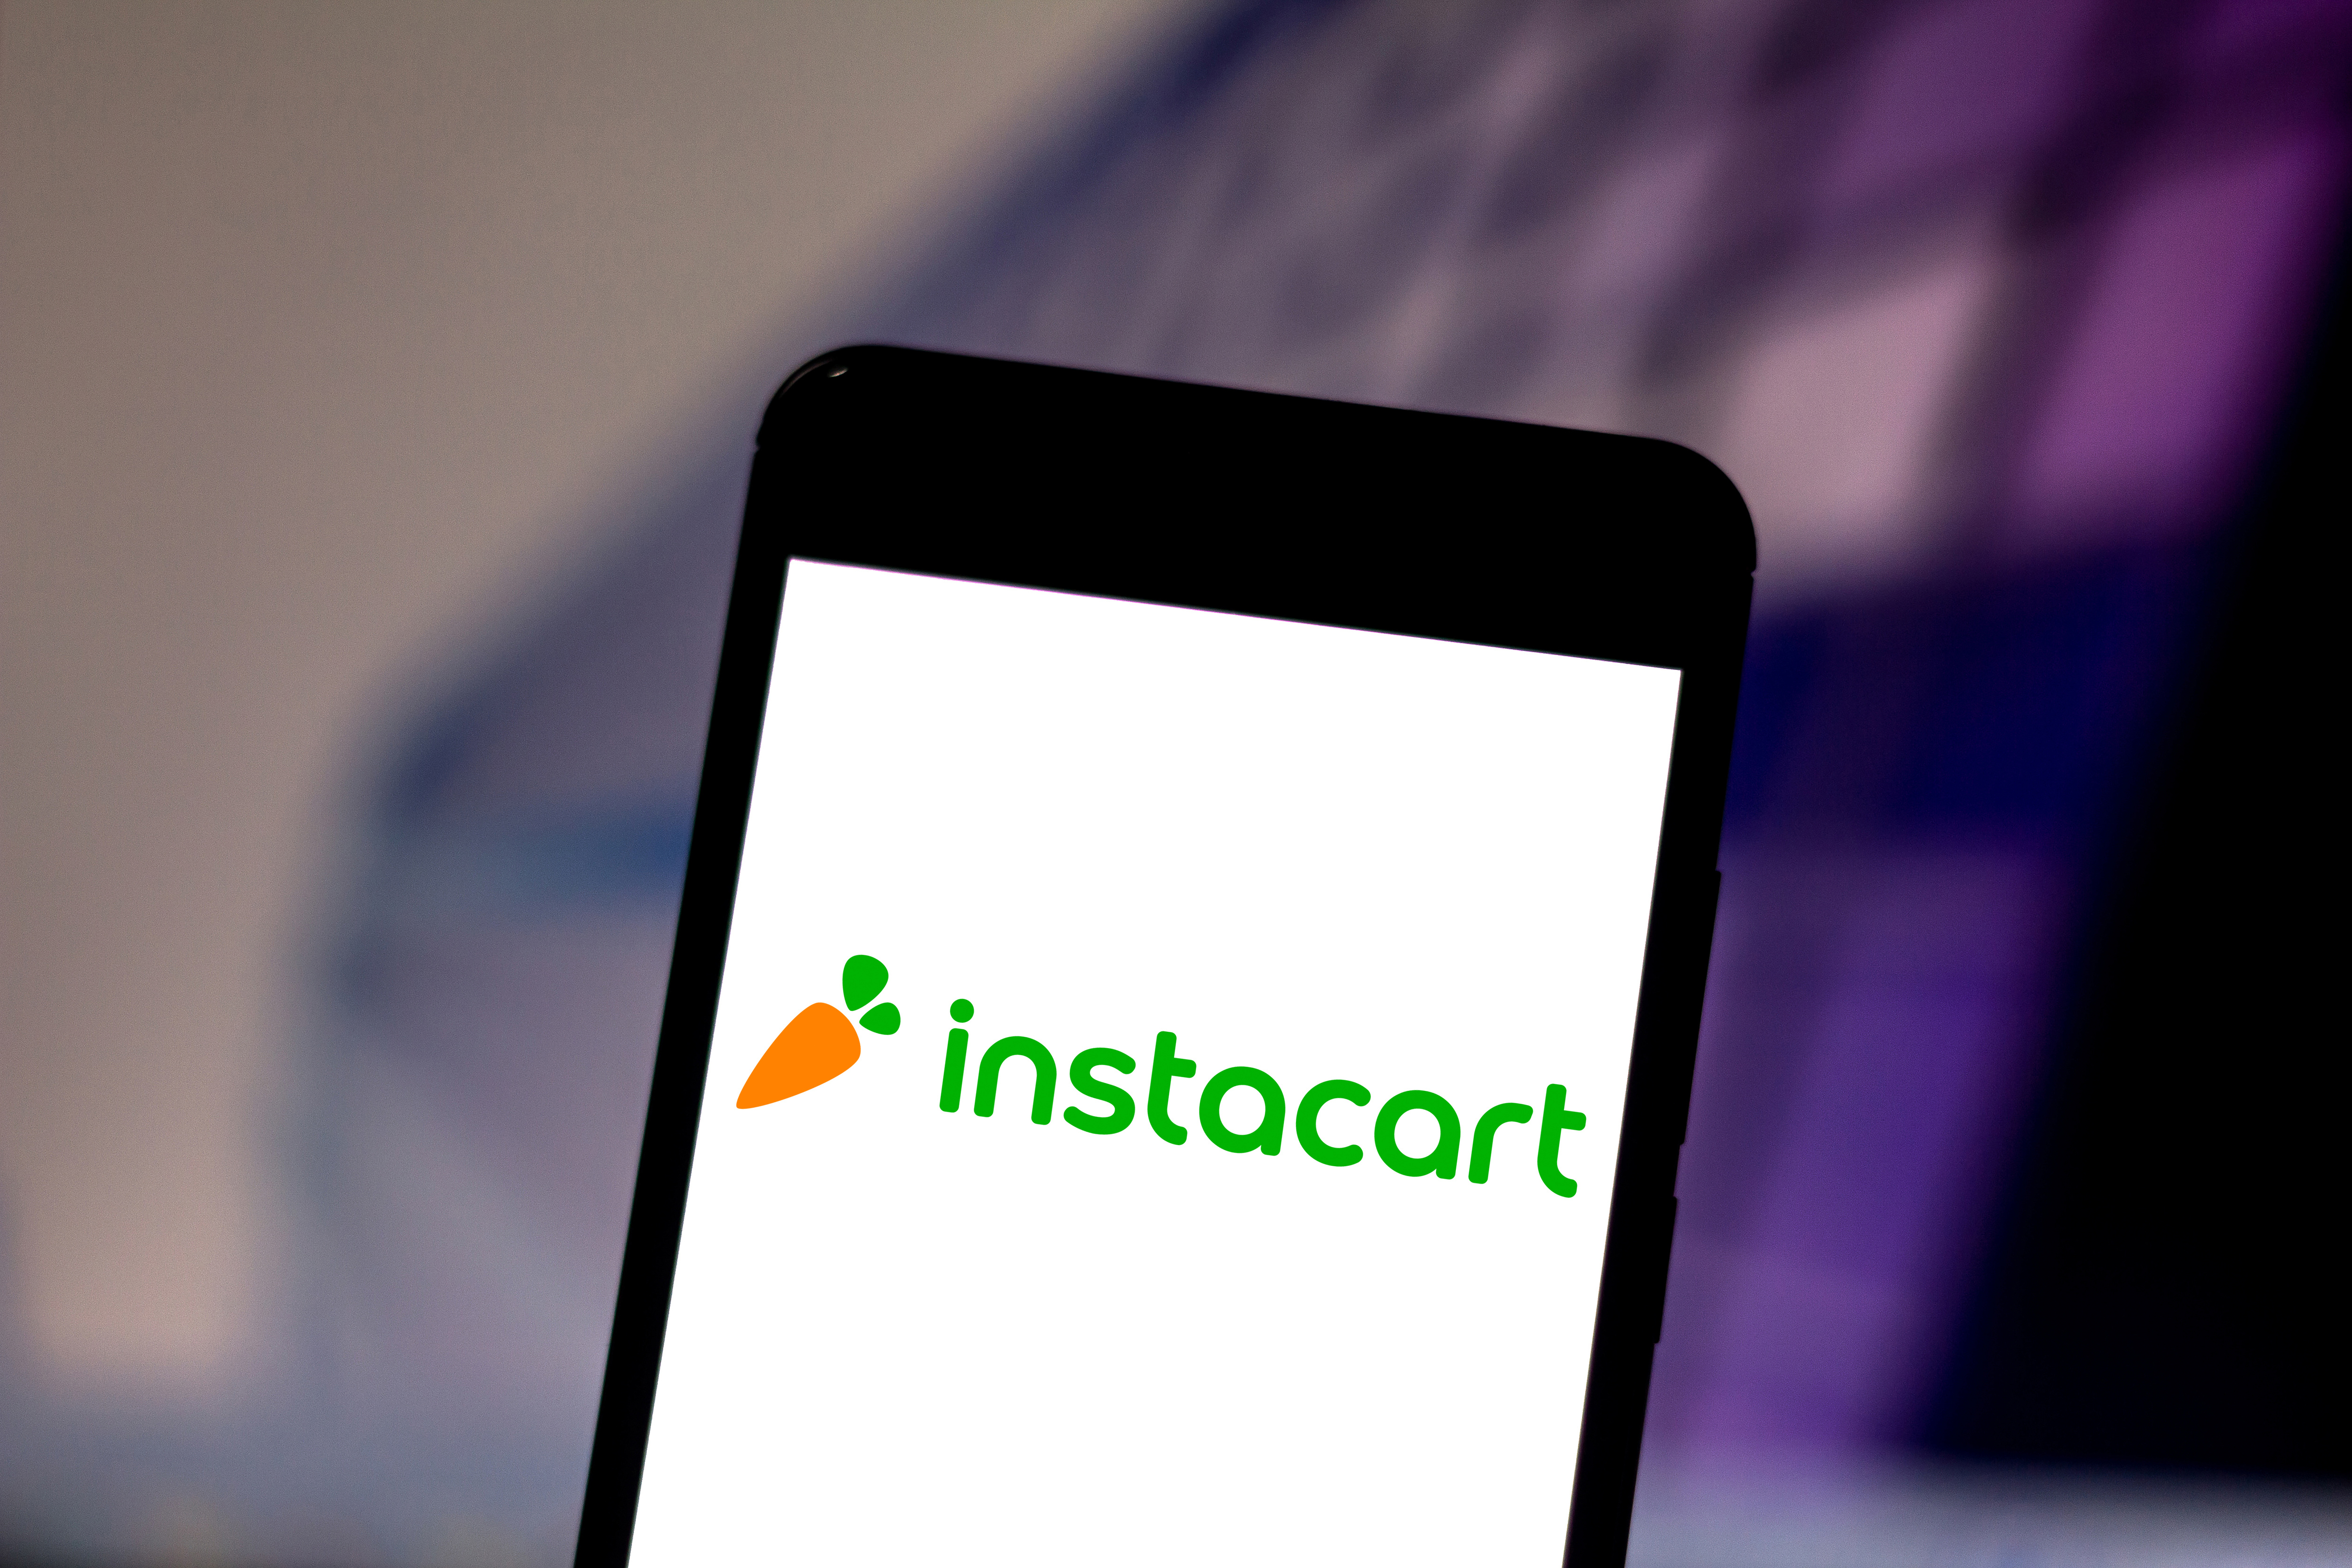 Instacart logo on a phone